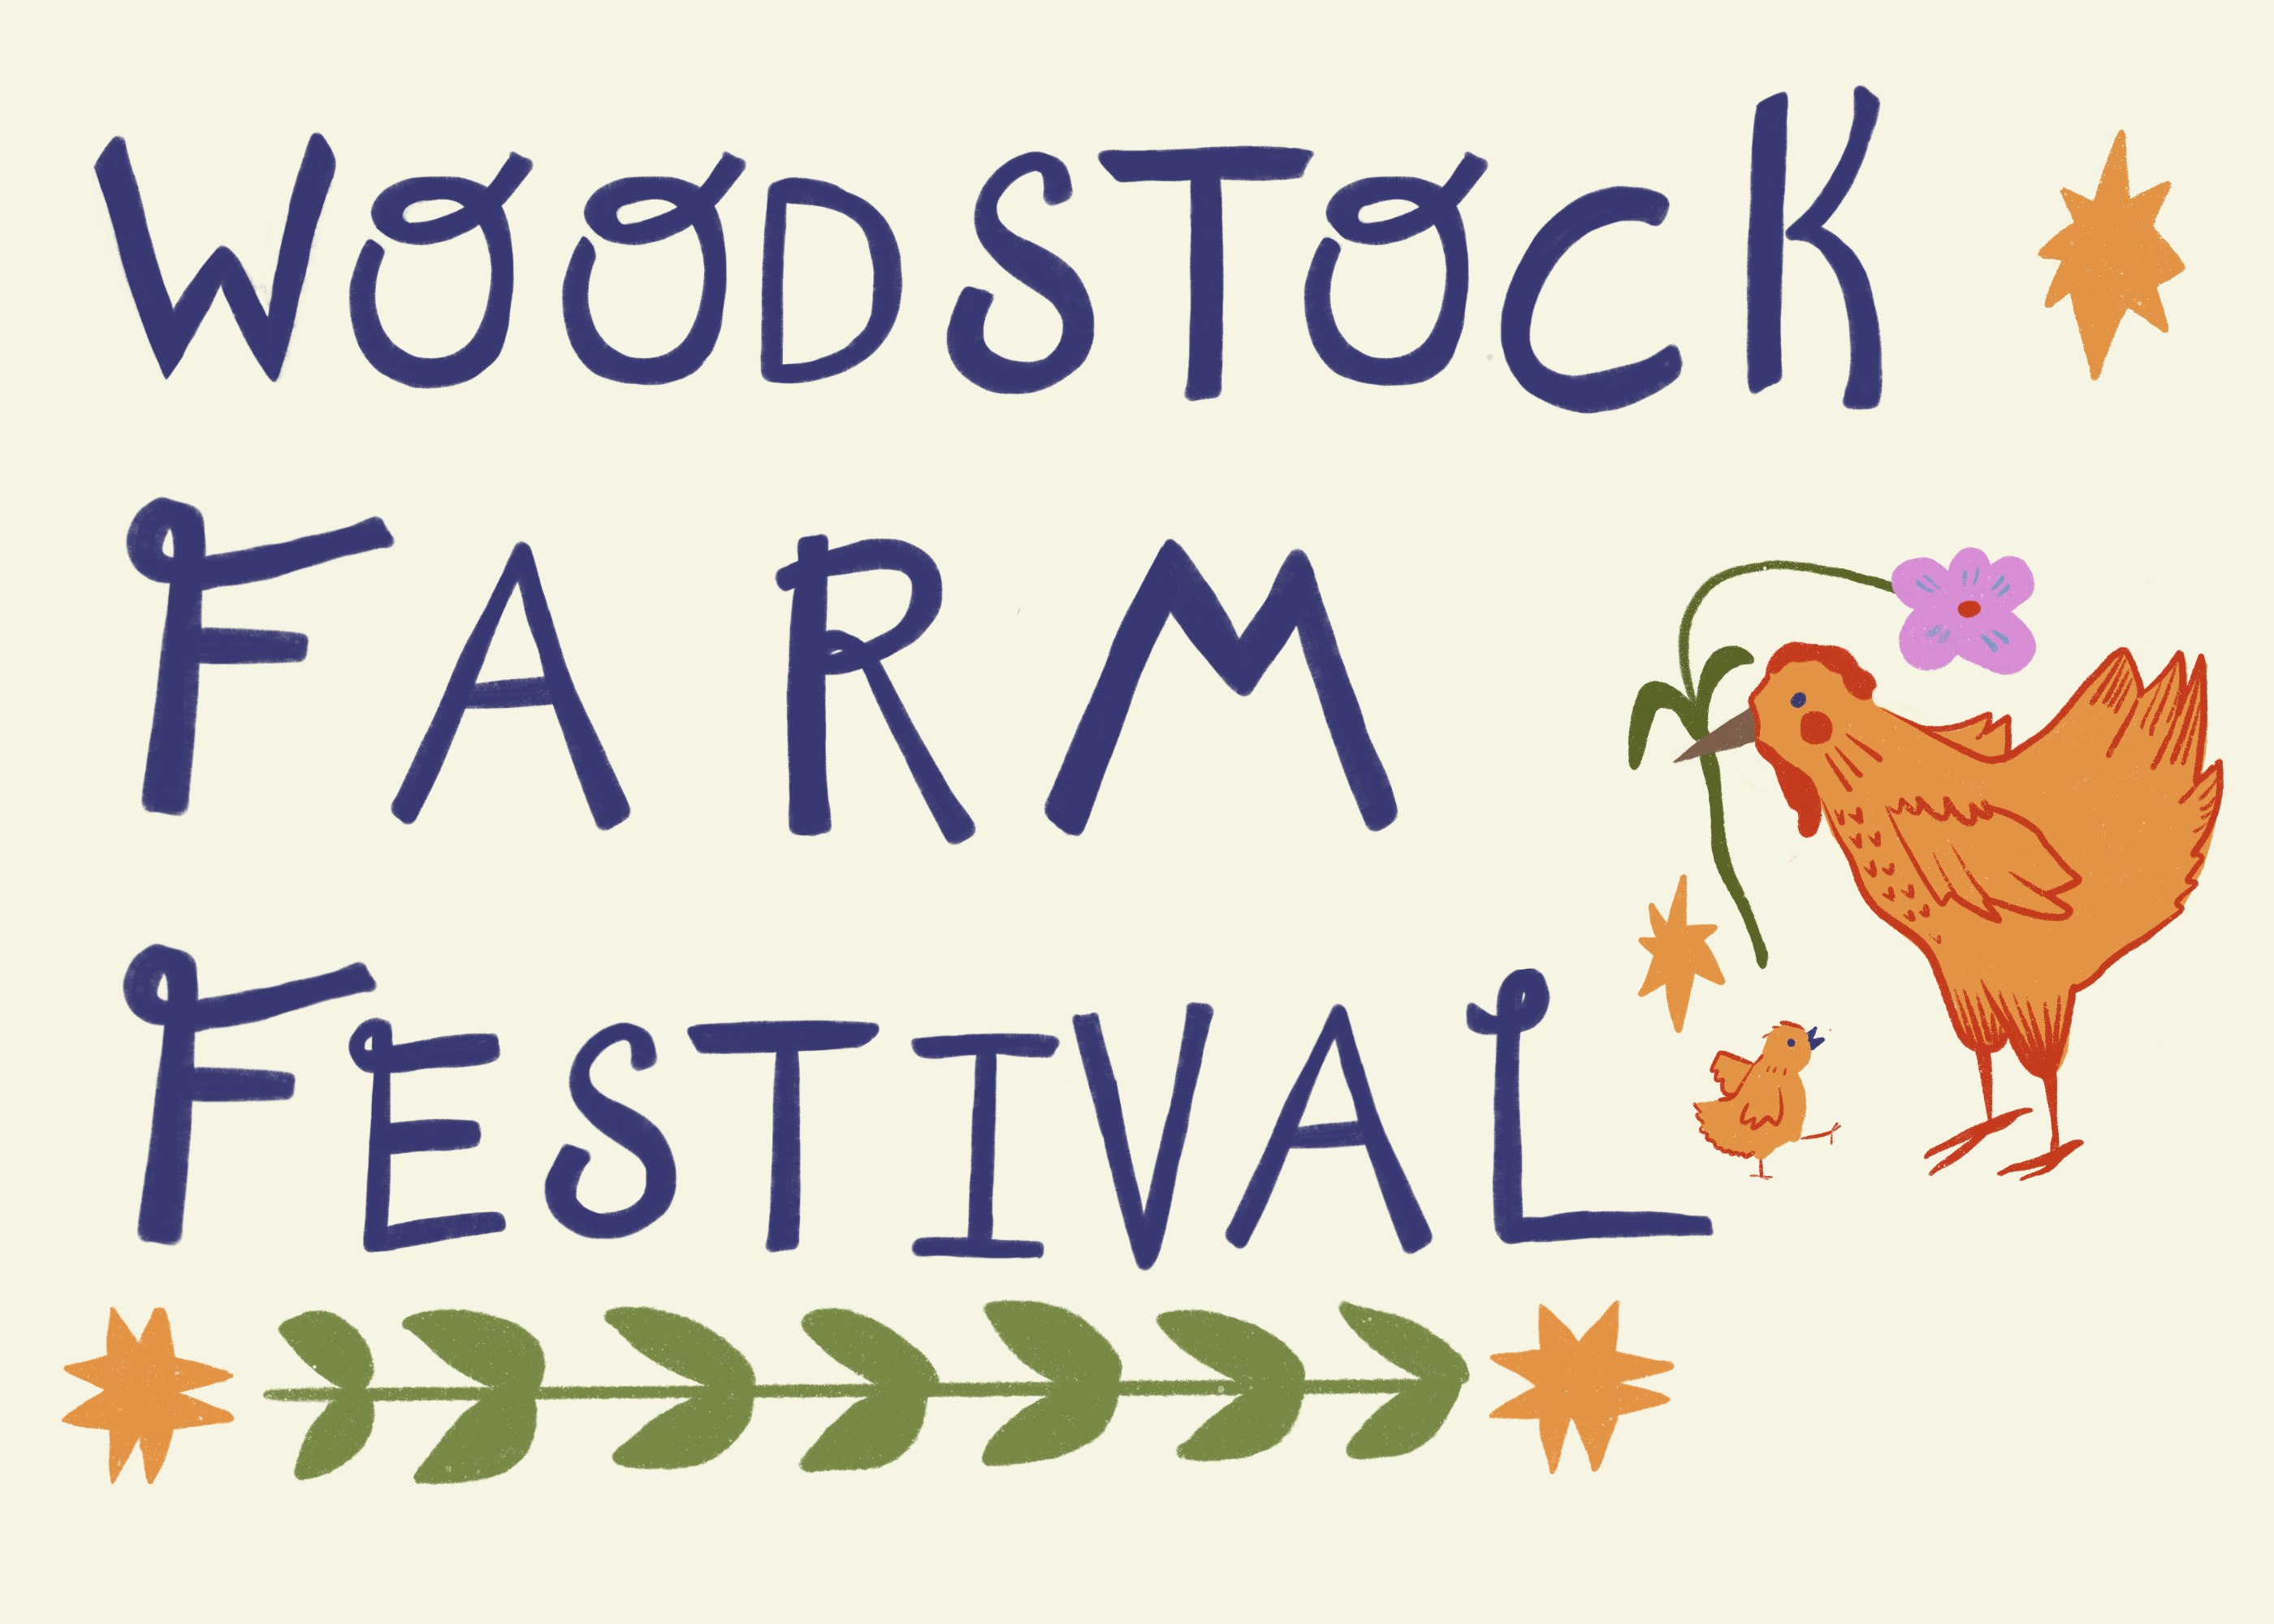 woodstock farm festival logo with chicken holding a flower